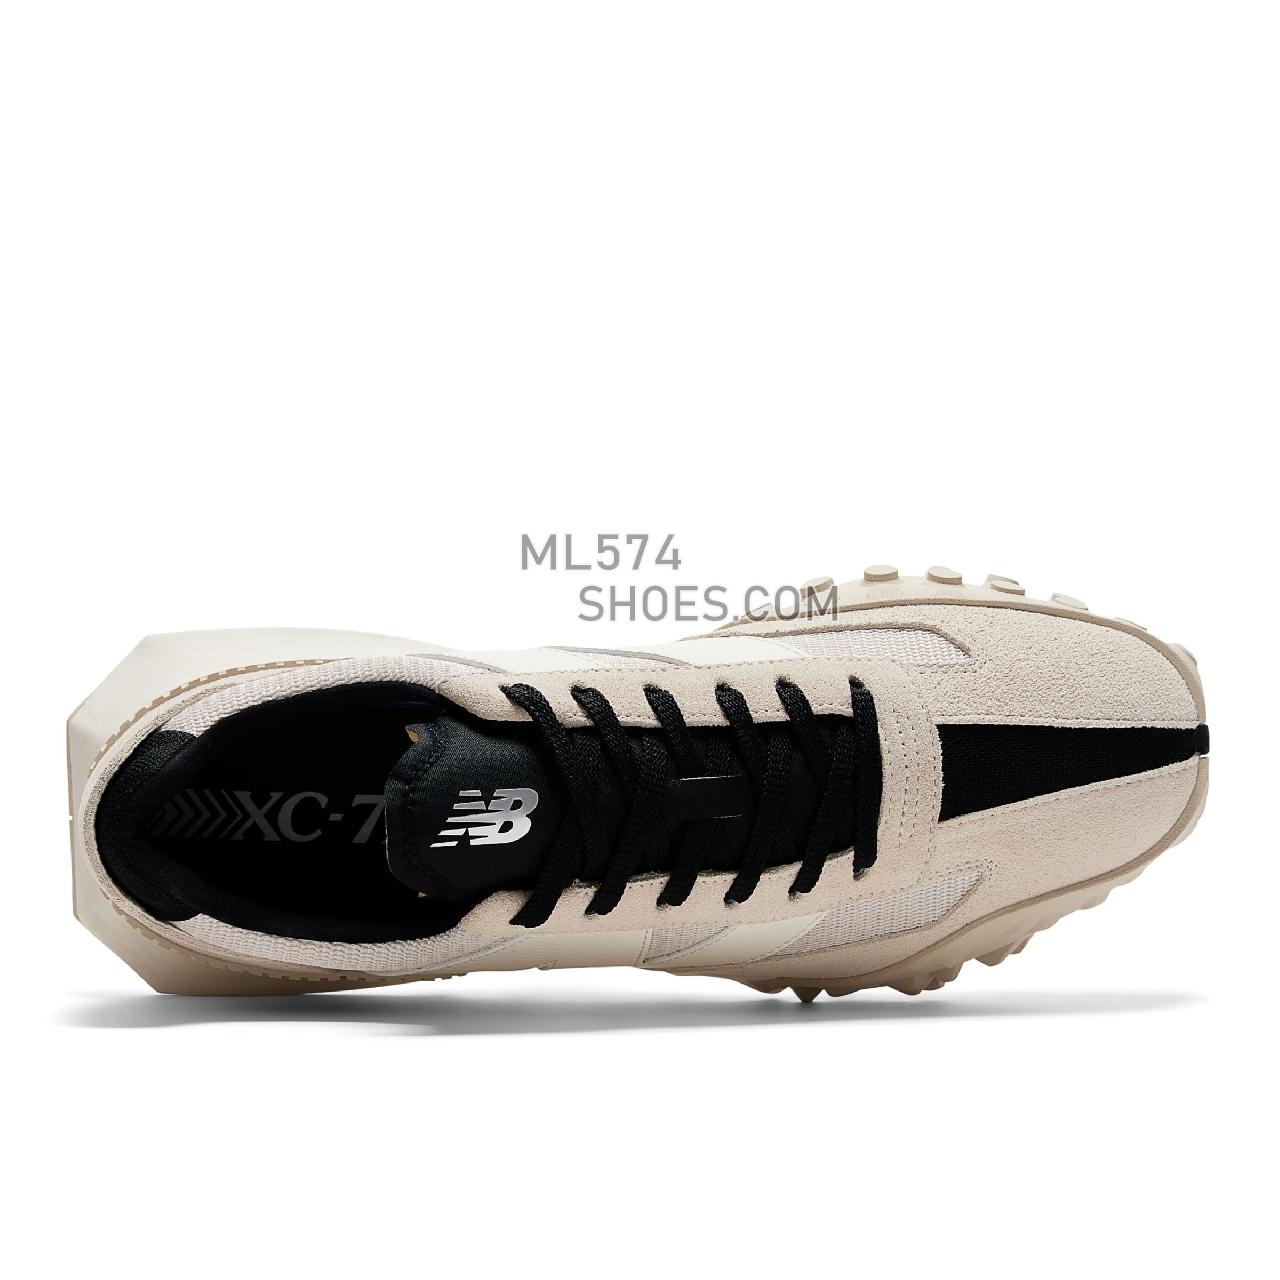 New Balance XC-72 - Unisex Men's Women's Sport Style Sneakers - Moonbeam with Black - UXC72DB1